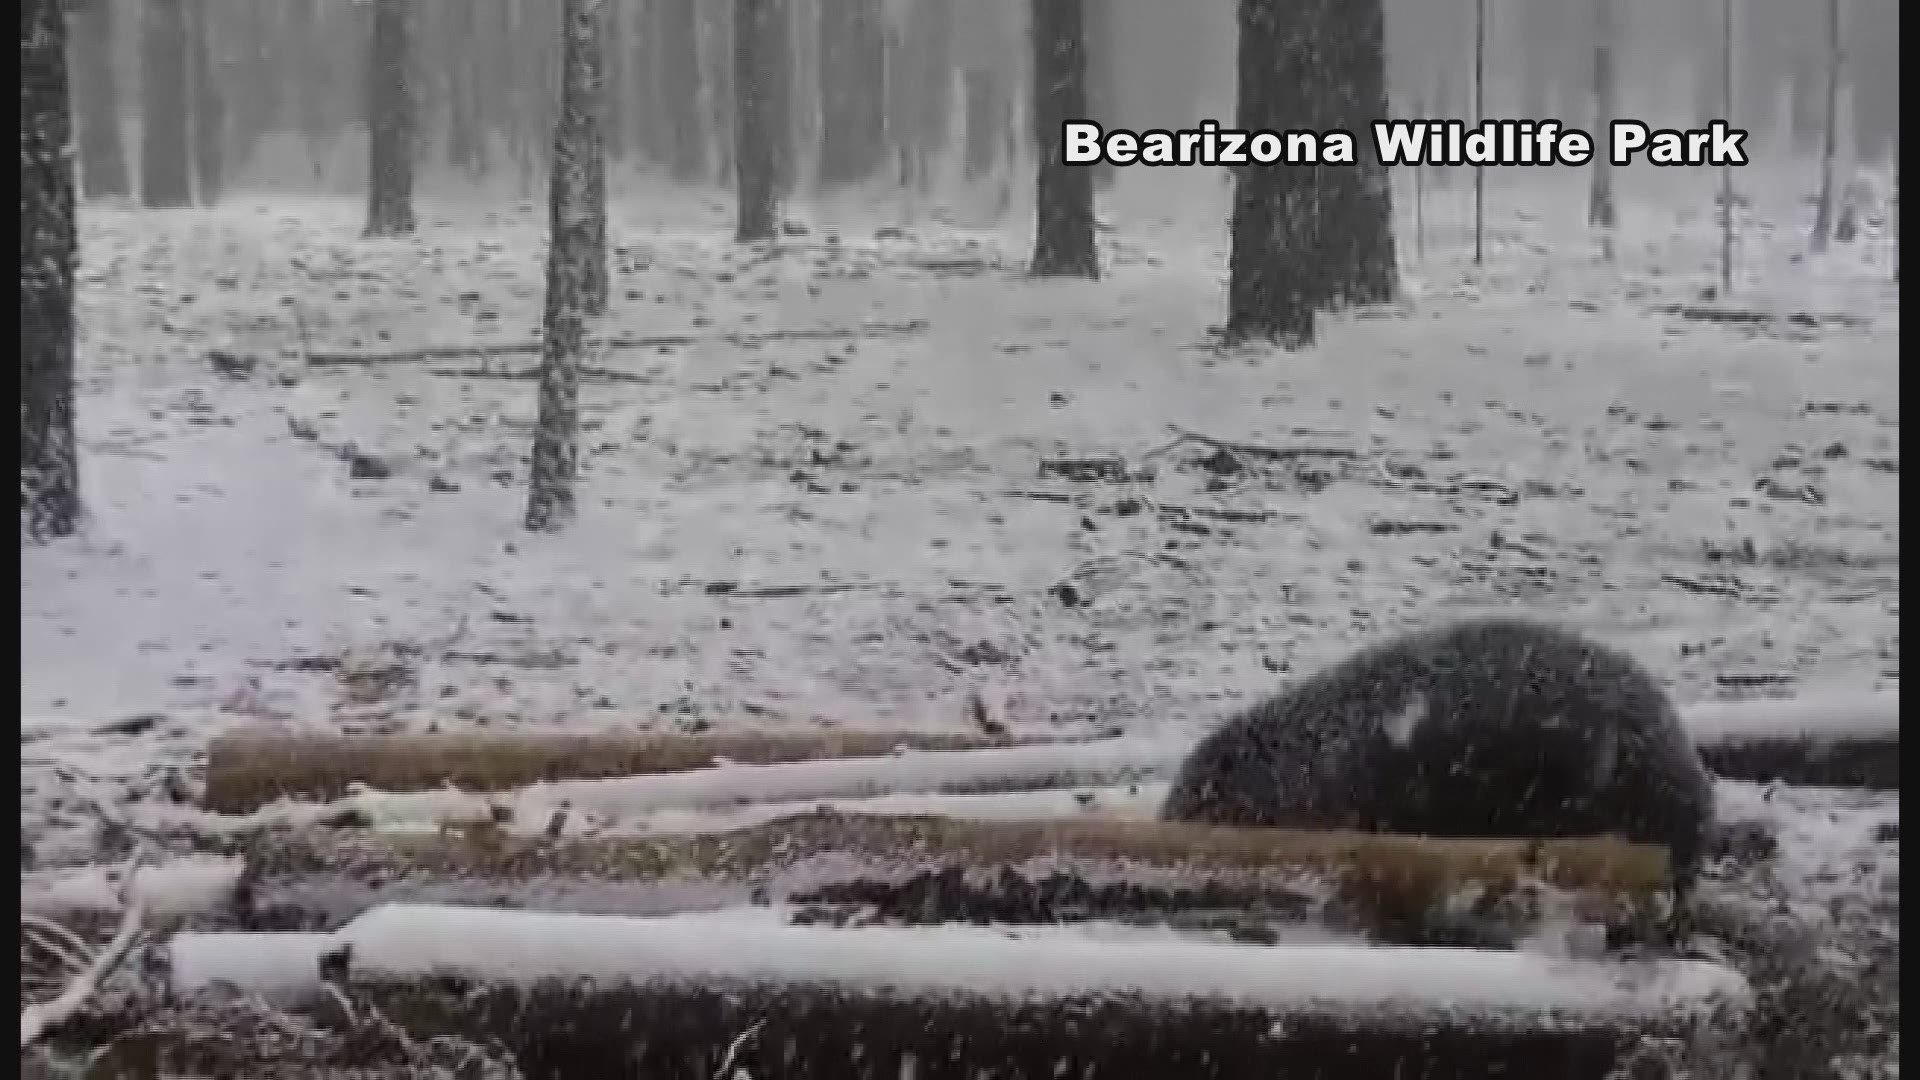 Animals at Bearizona enjoying snow